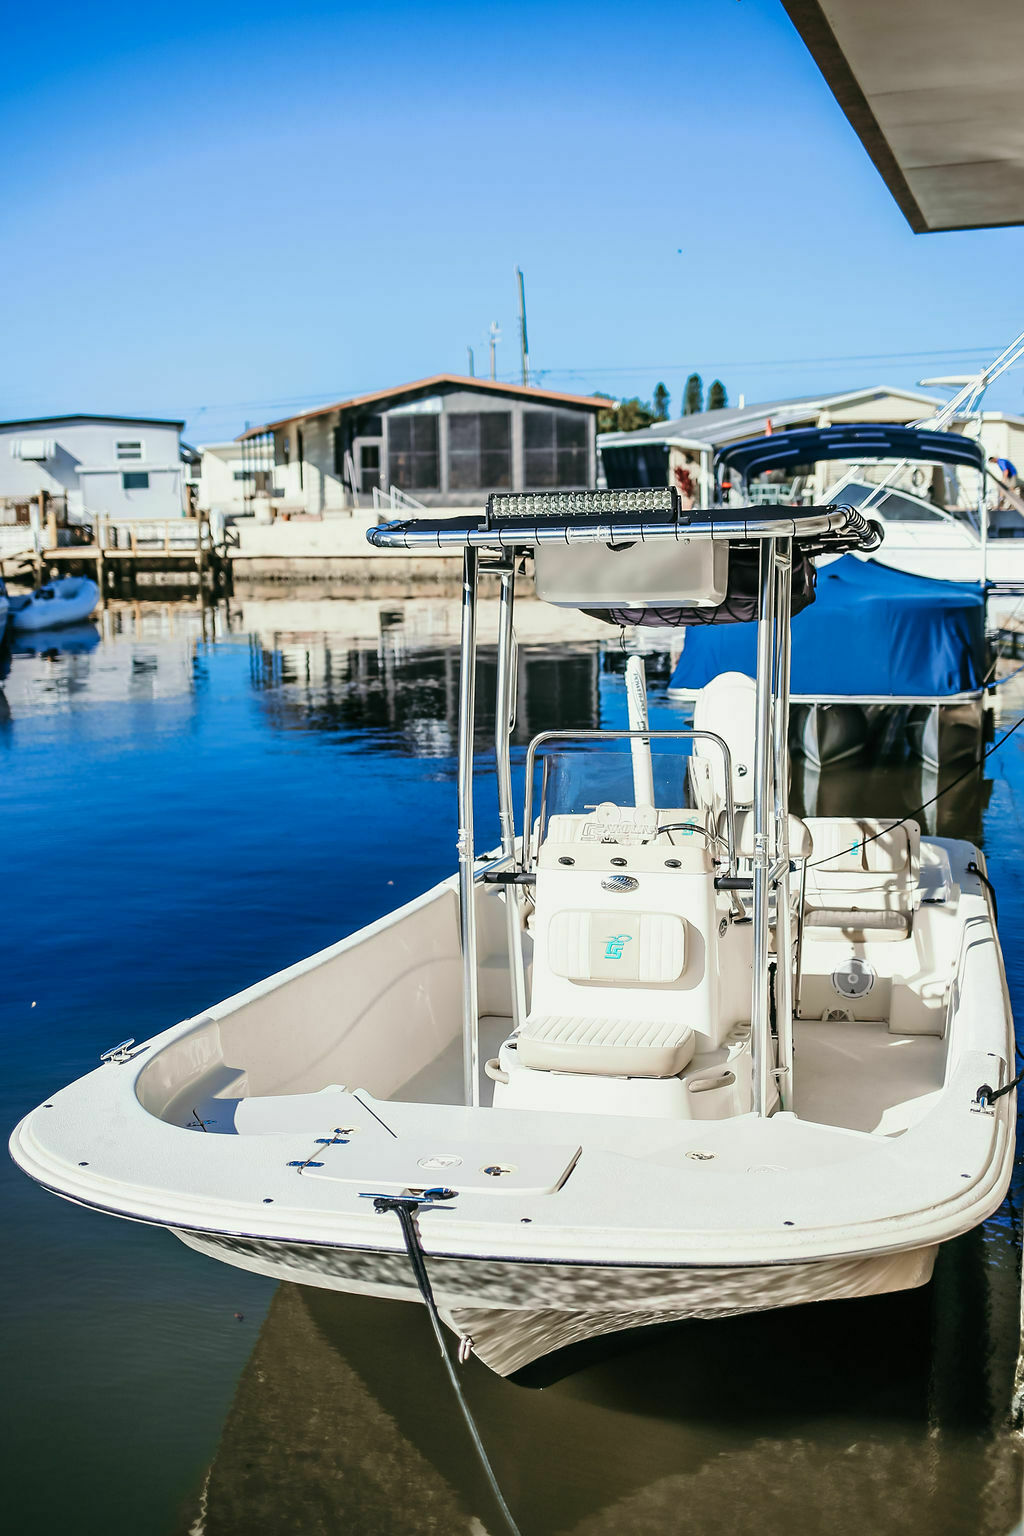 Carolina Skiff 198 Dlv 2016 For Sale For 26 500 Boats From Usa Com